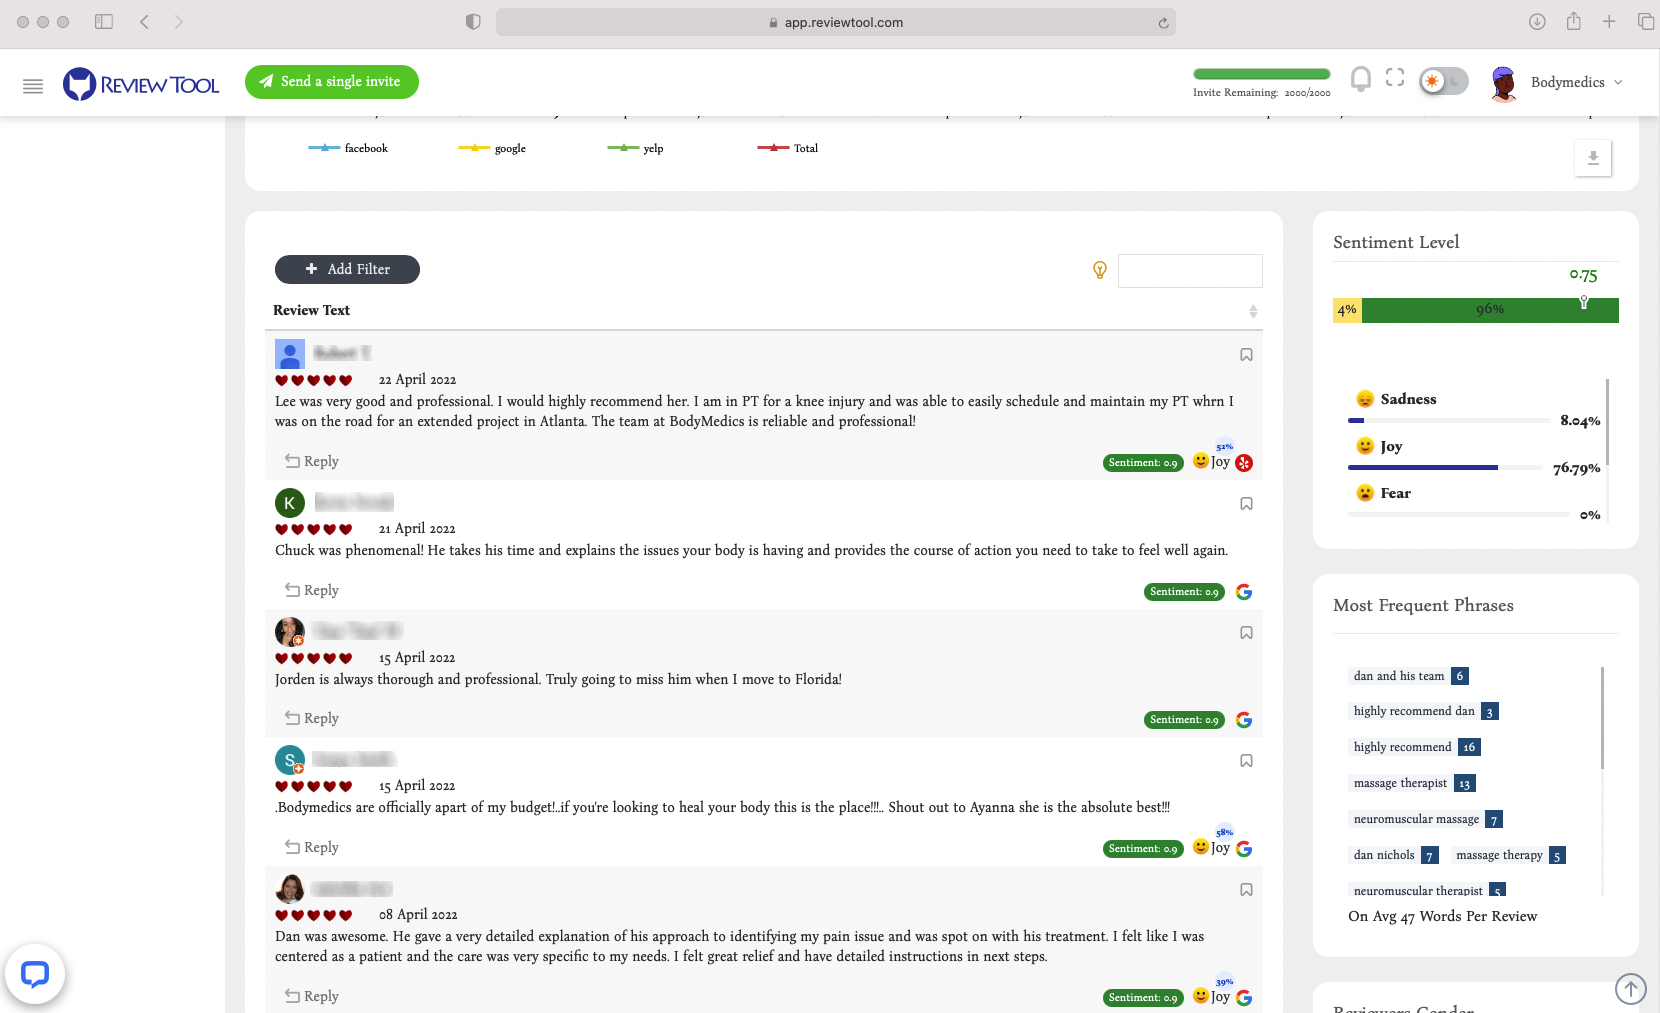 rupture Lurk Dew Get 5-Star Online Customer Reviews on Google, Yelp and Facebook